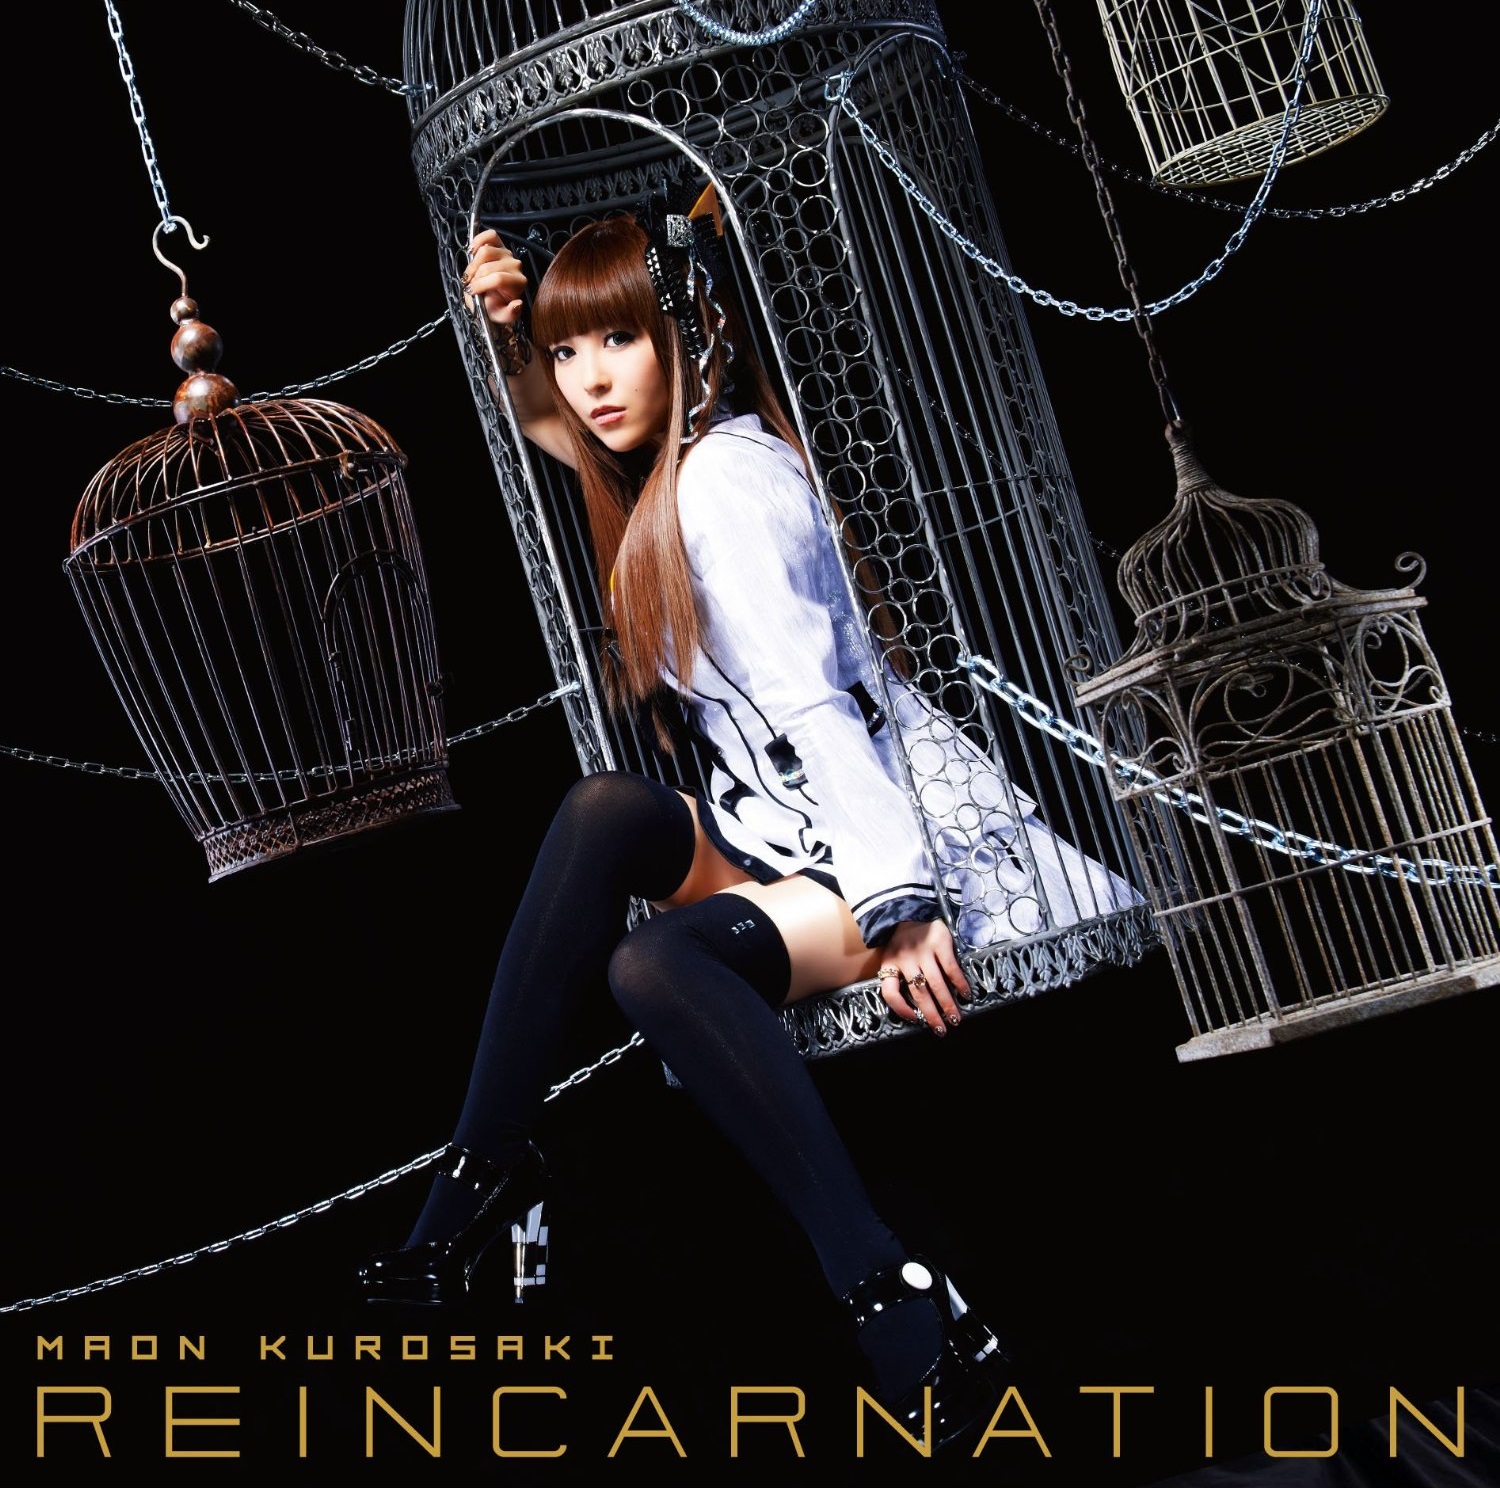 20181001.2156.61 Maon Kurosaki - Reincarnation cover 1.jpg